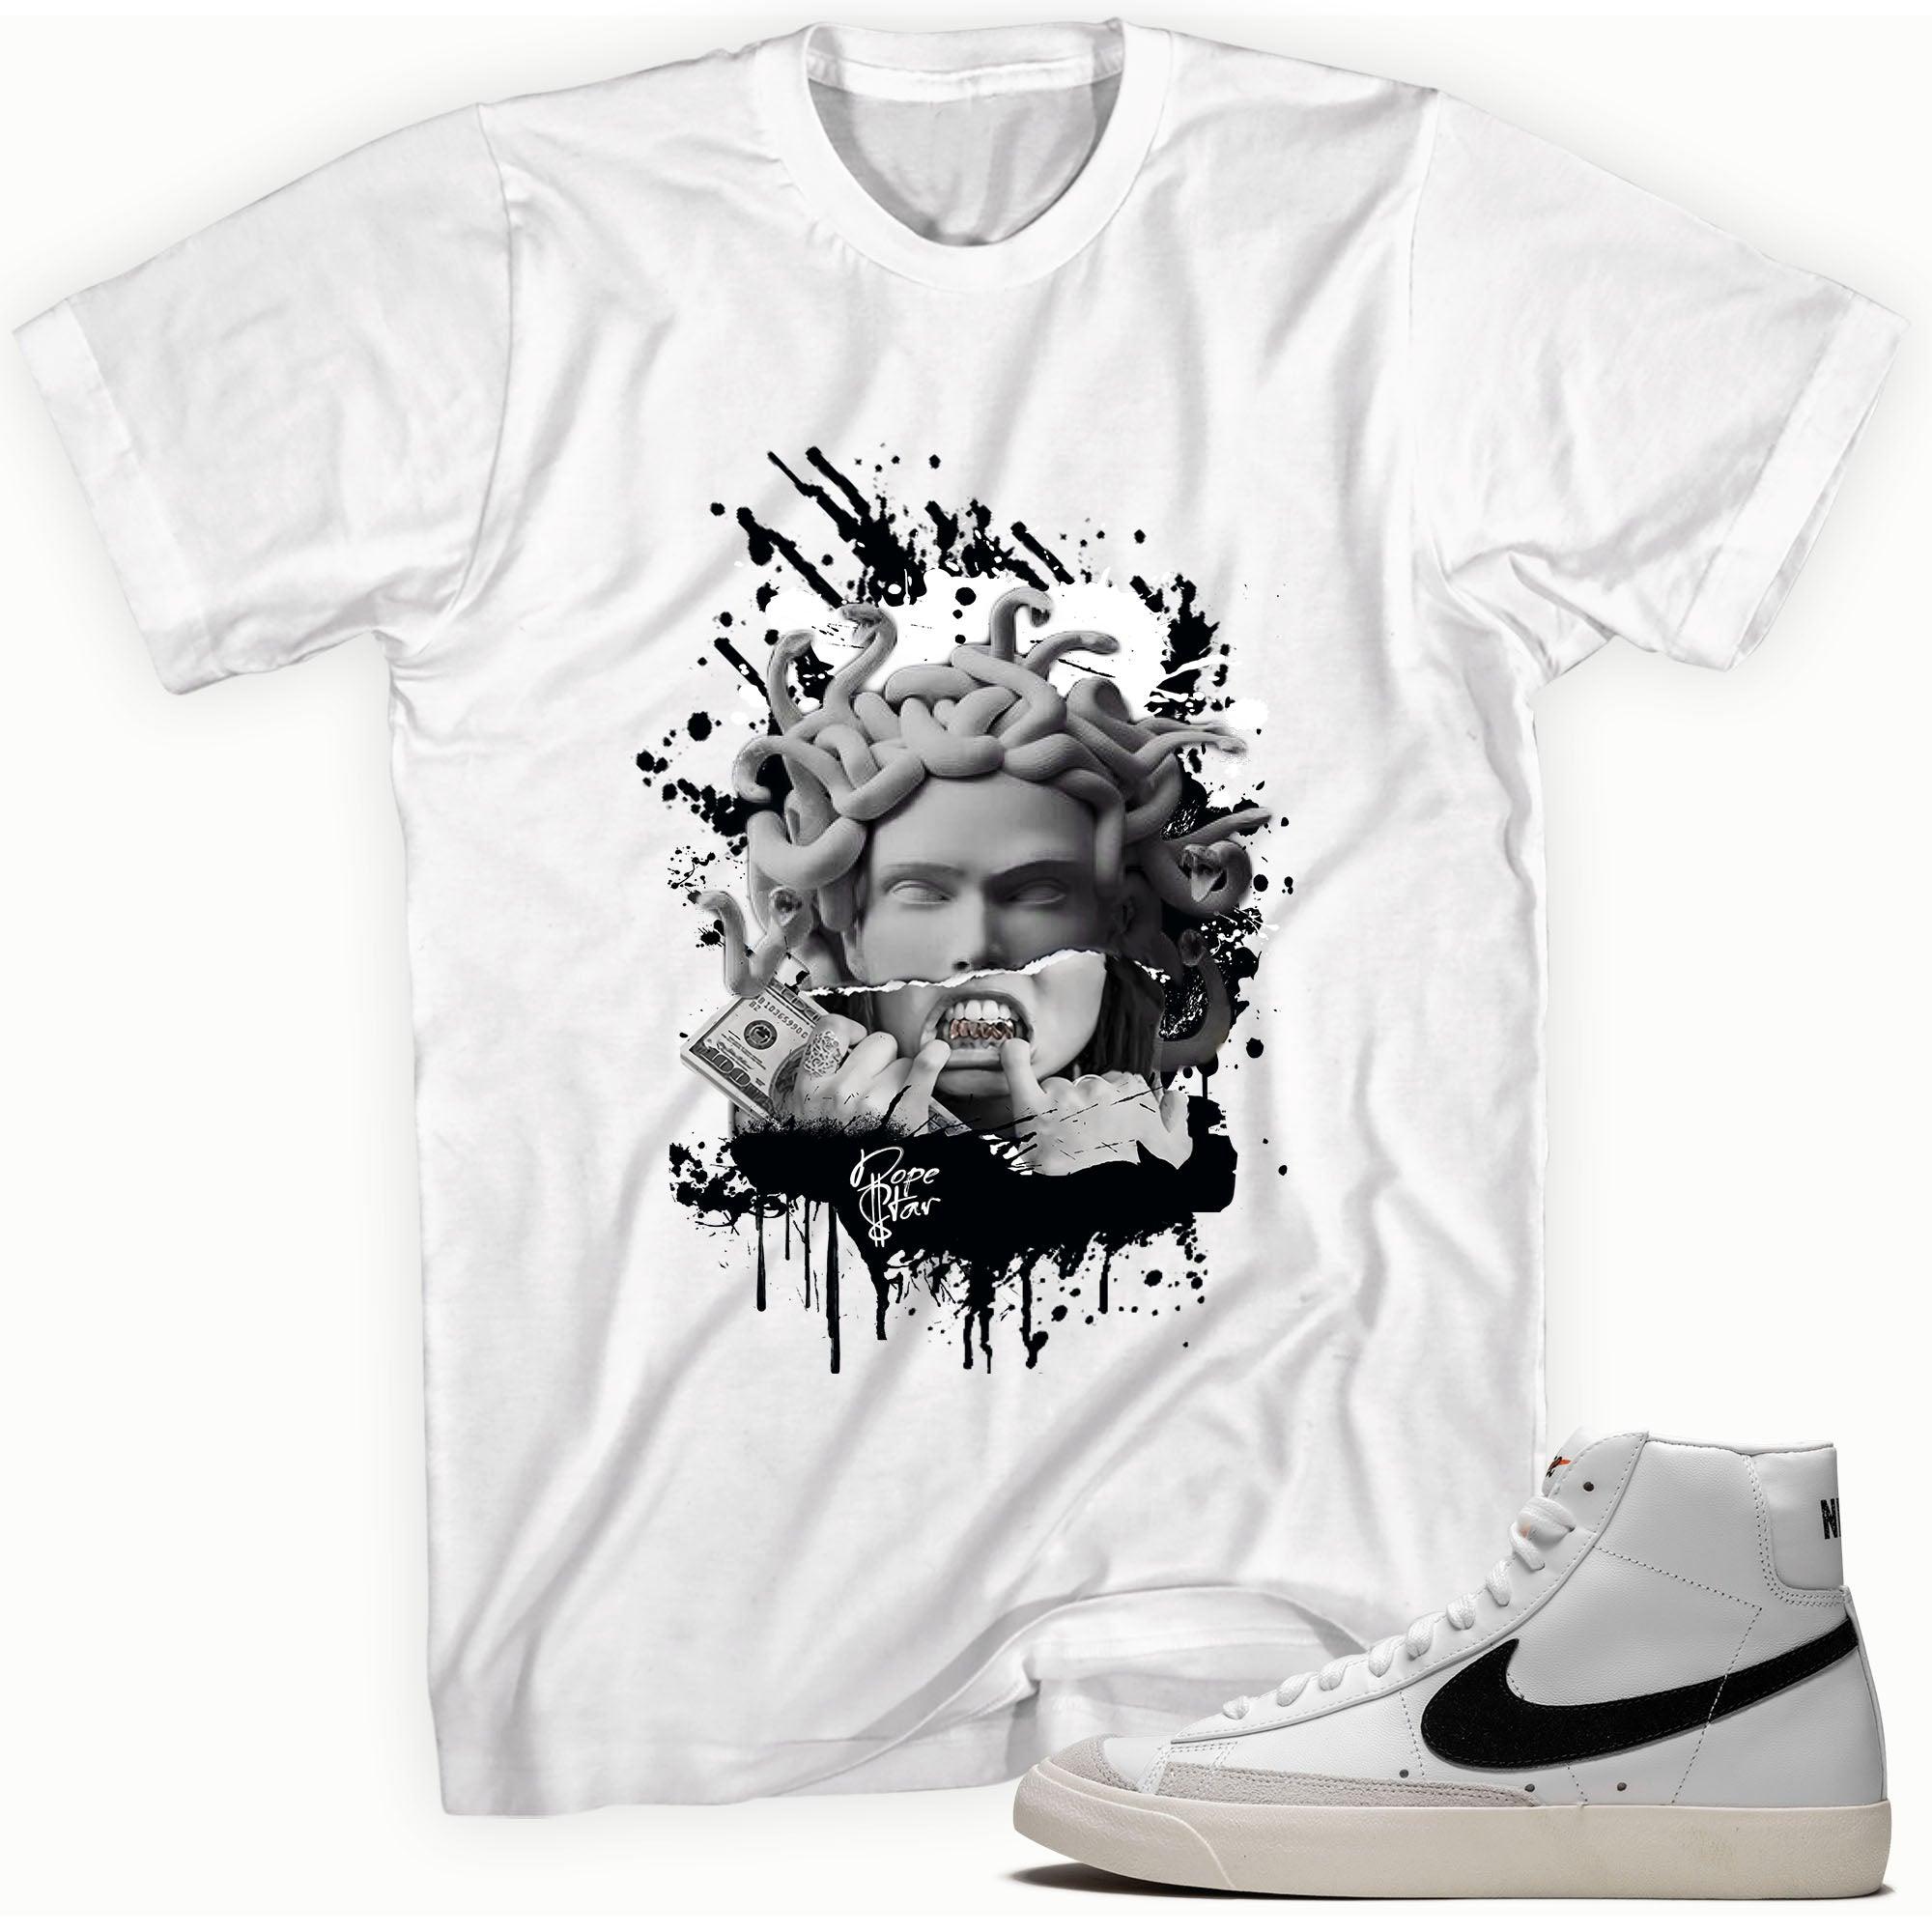 Nike Blazer Mid 77 Vintage White Black Shirt - Medusa - Sneaker Shirts Outlet